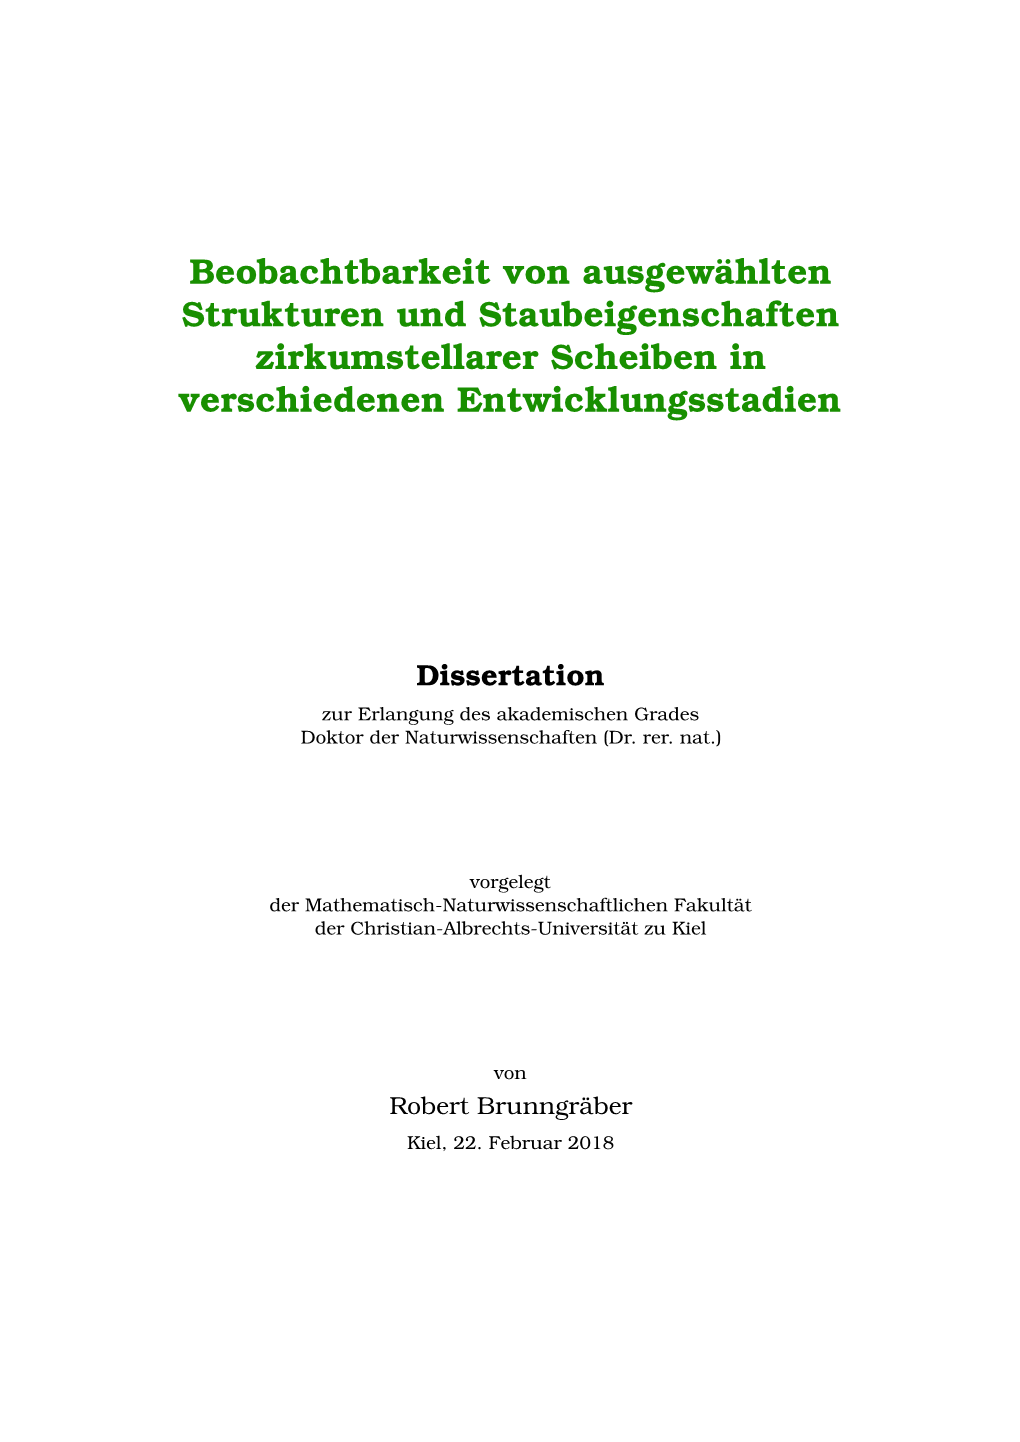 Dissertation Rbrunngraeber.Pdf